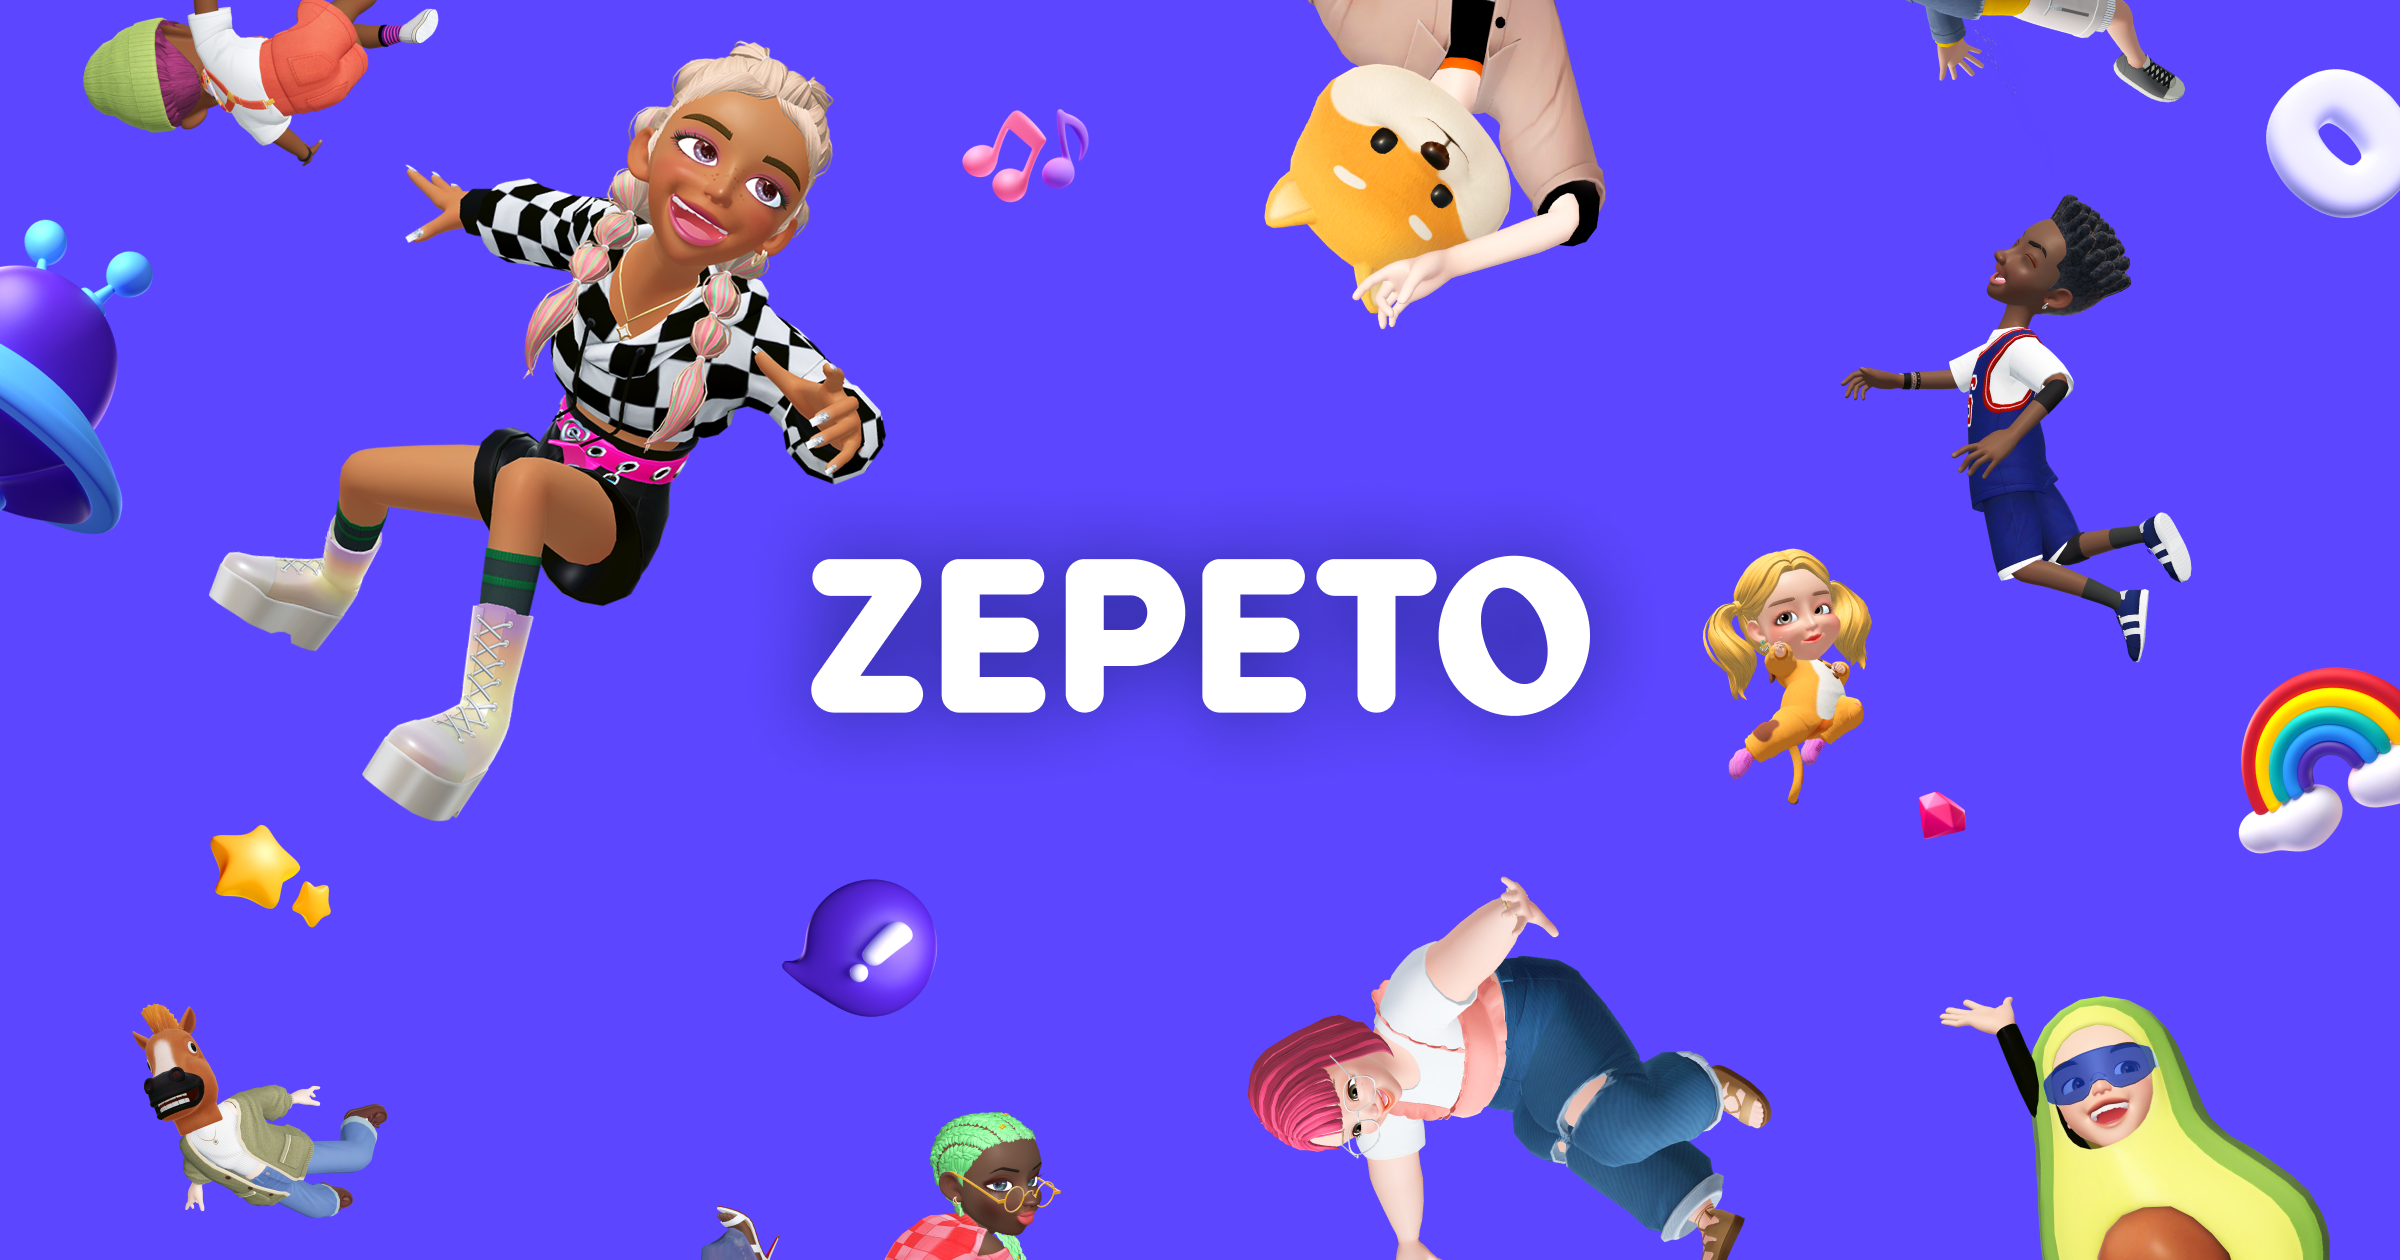 Snows avatar app Zepeto registers 150M users eyes China market   TechCrunch